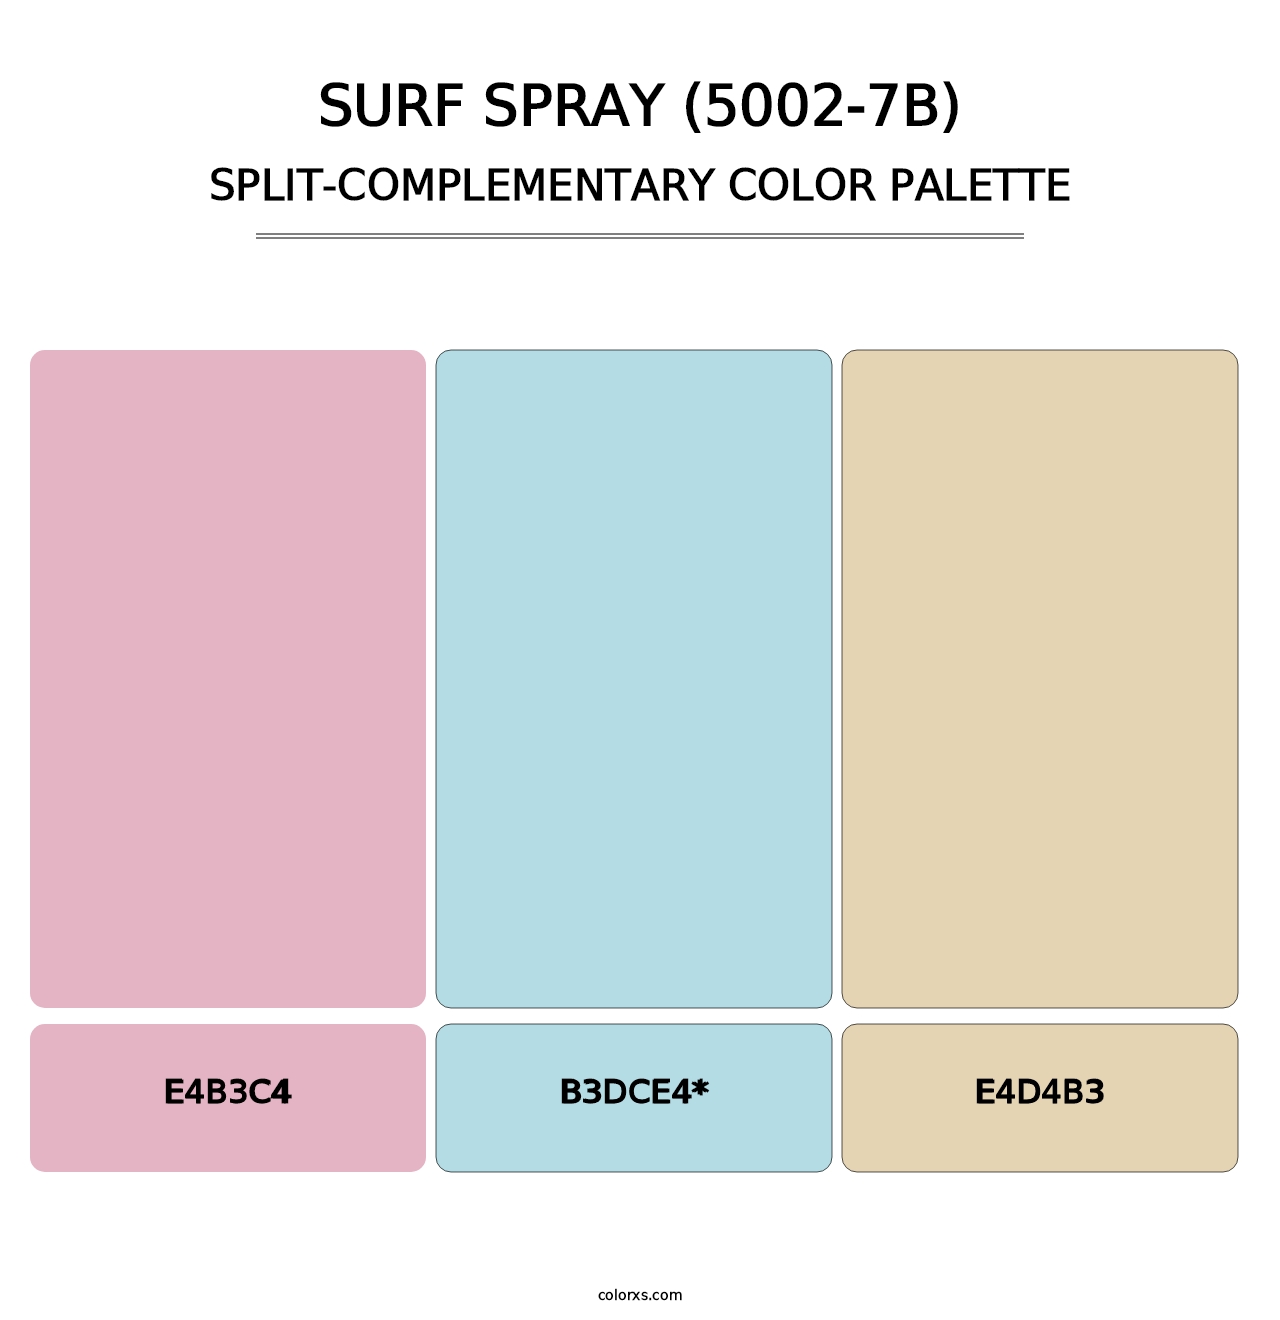 Surf Spray (5002-7B) - Split-Complementary Color Palette